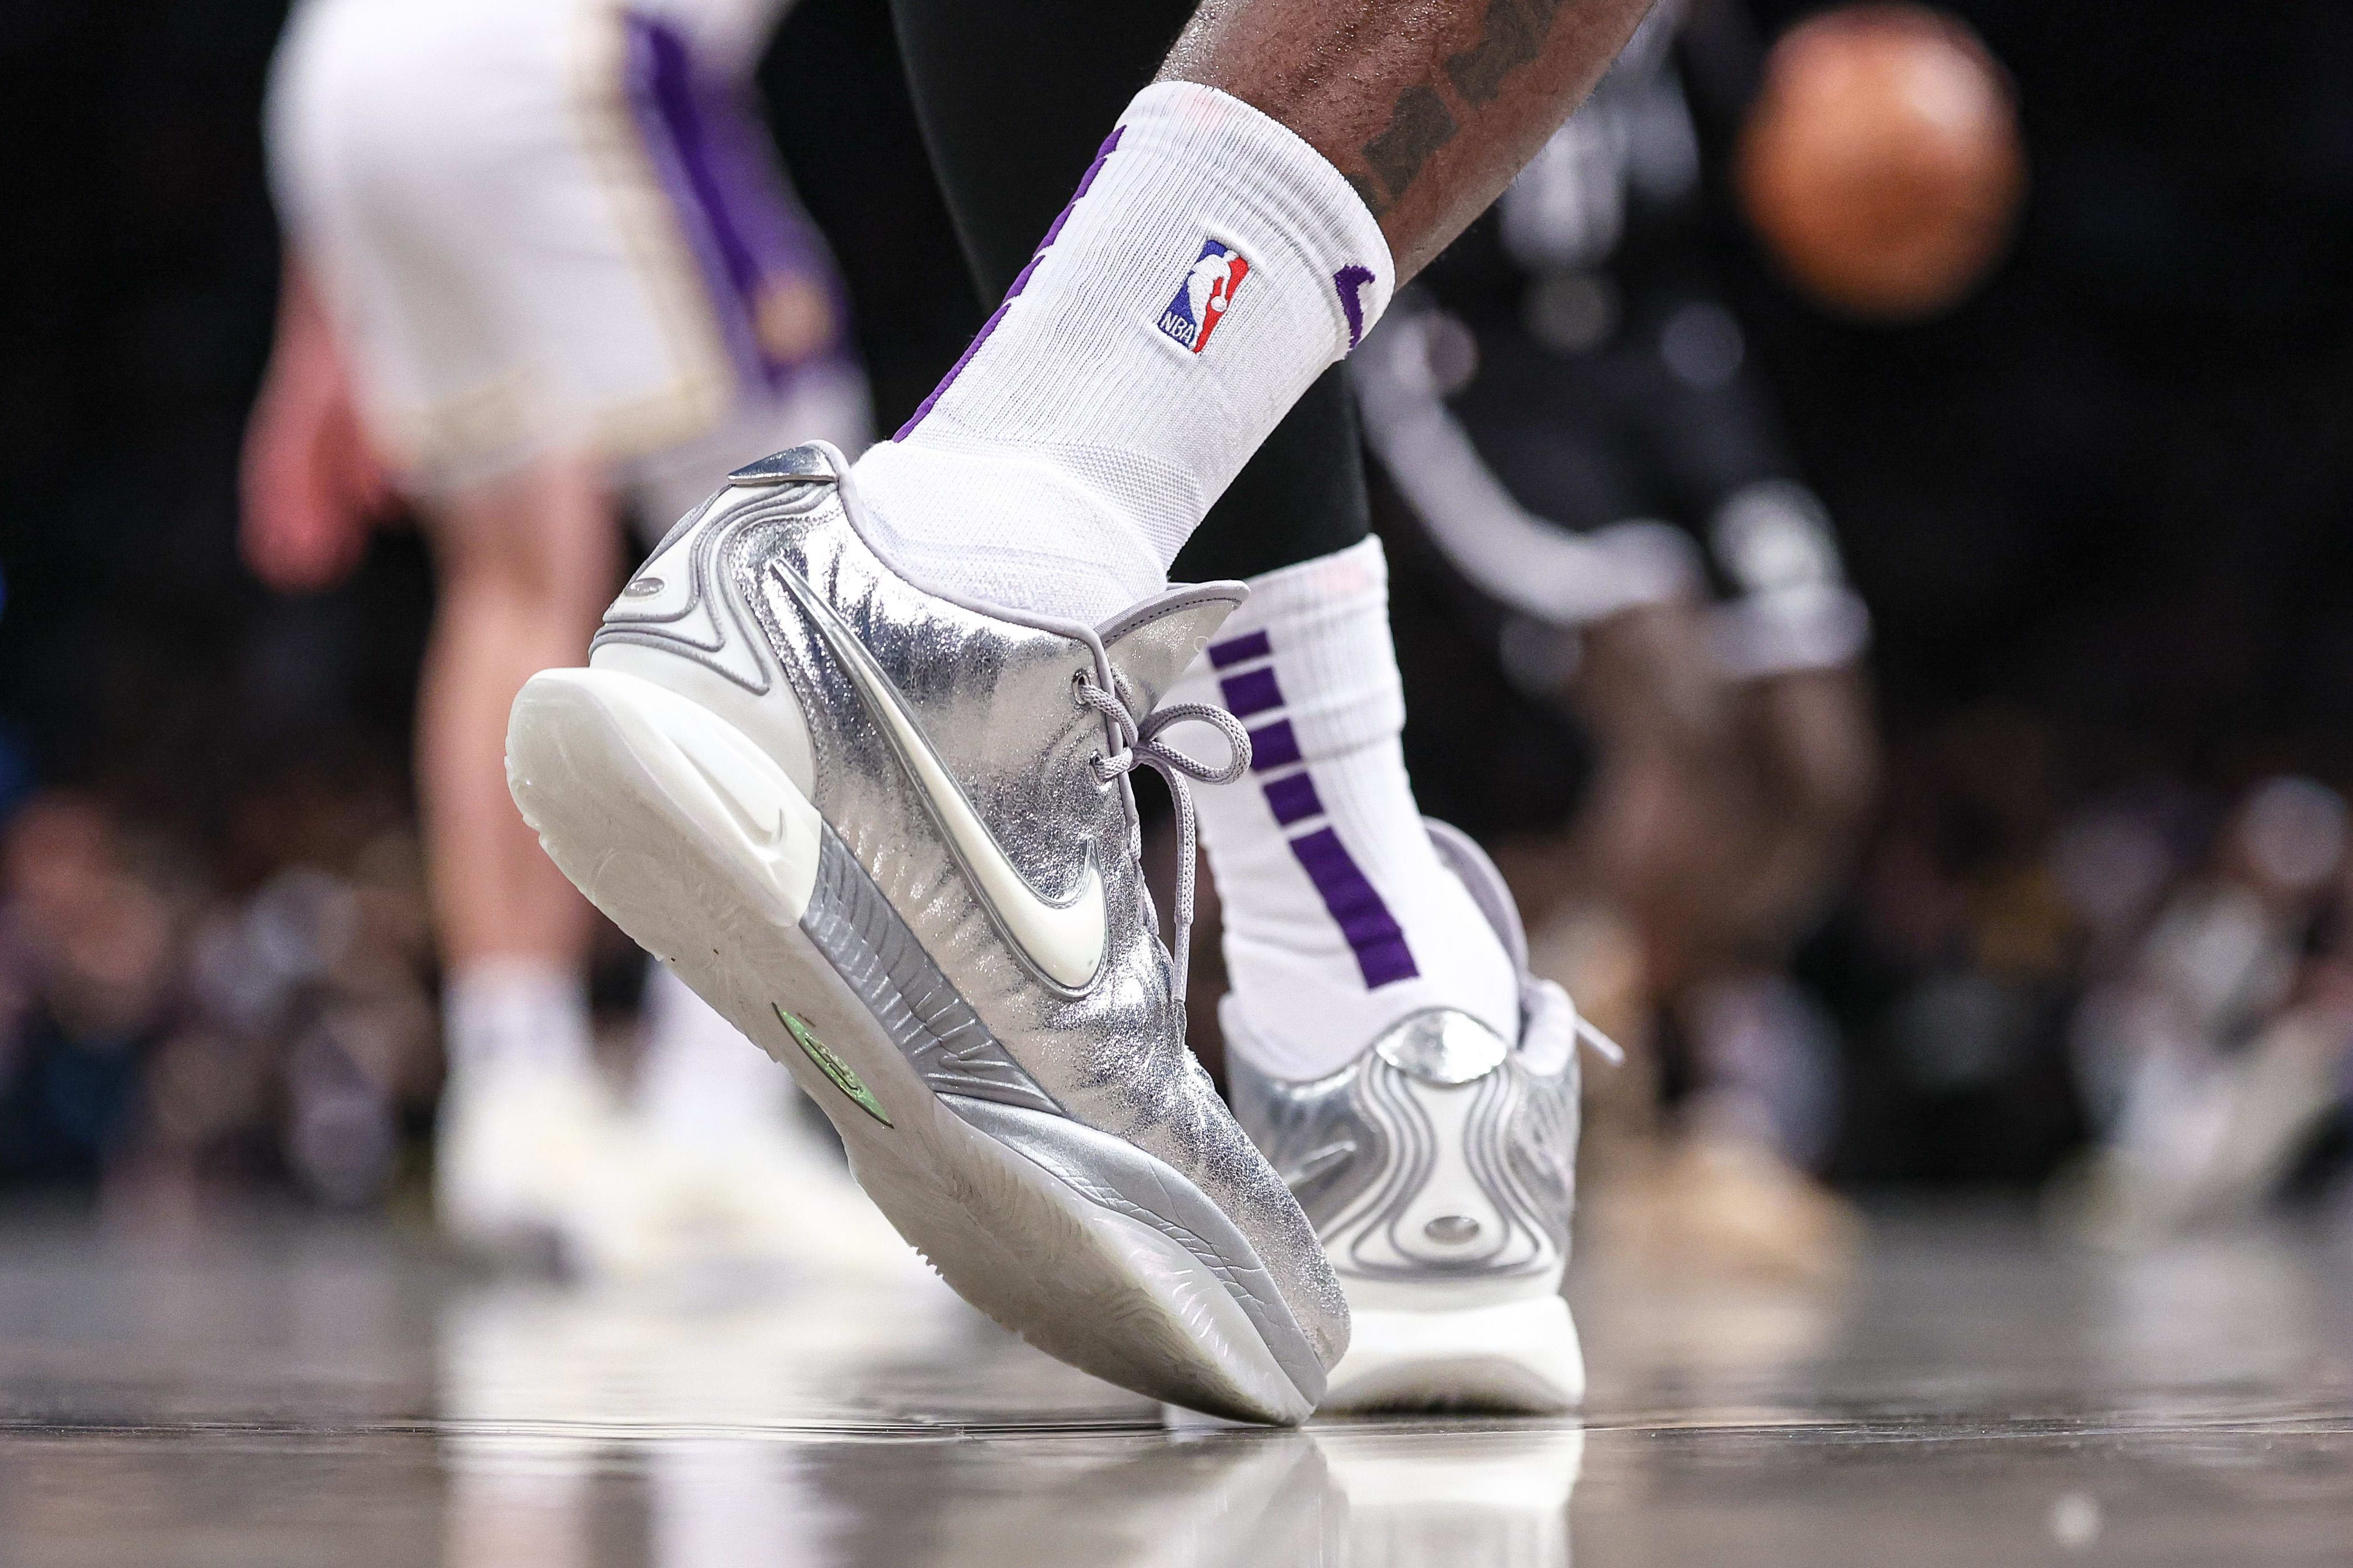 Los Angeles Lakers forward LeBron James' silver Nike sneakers.